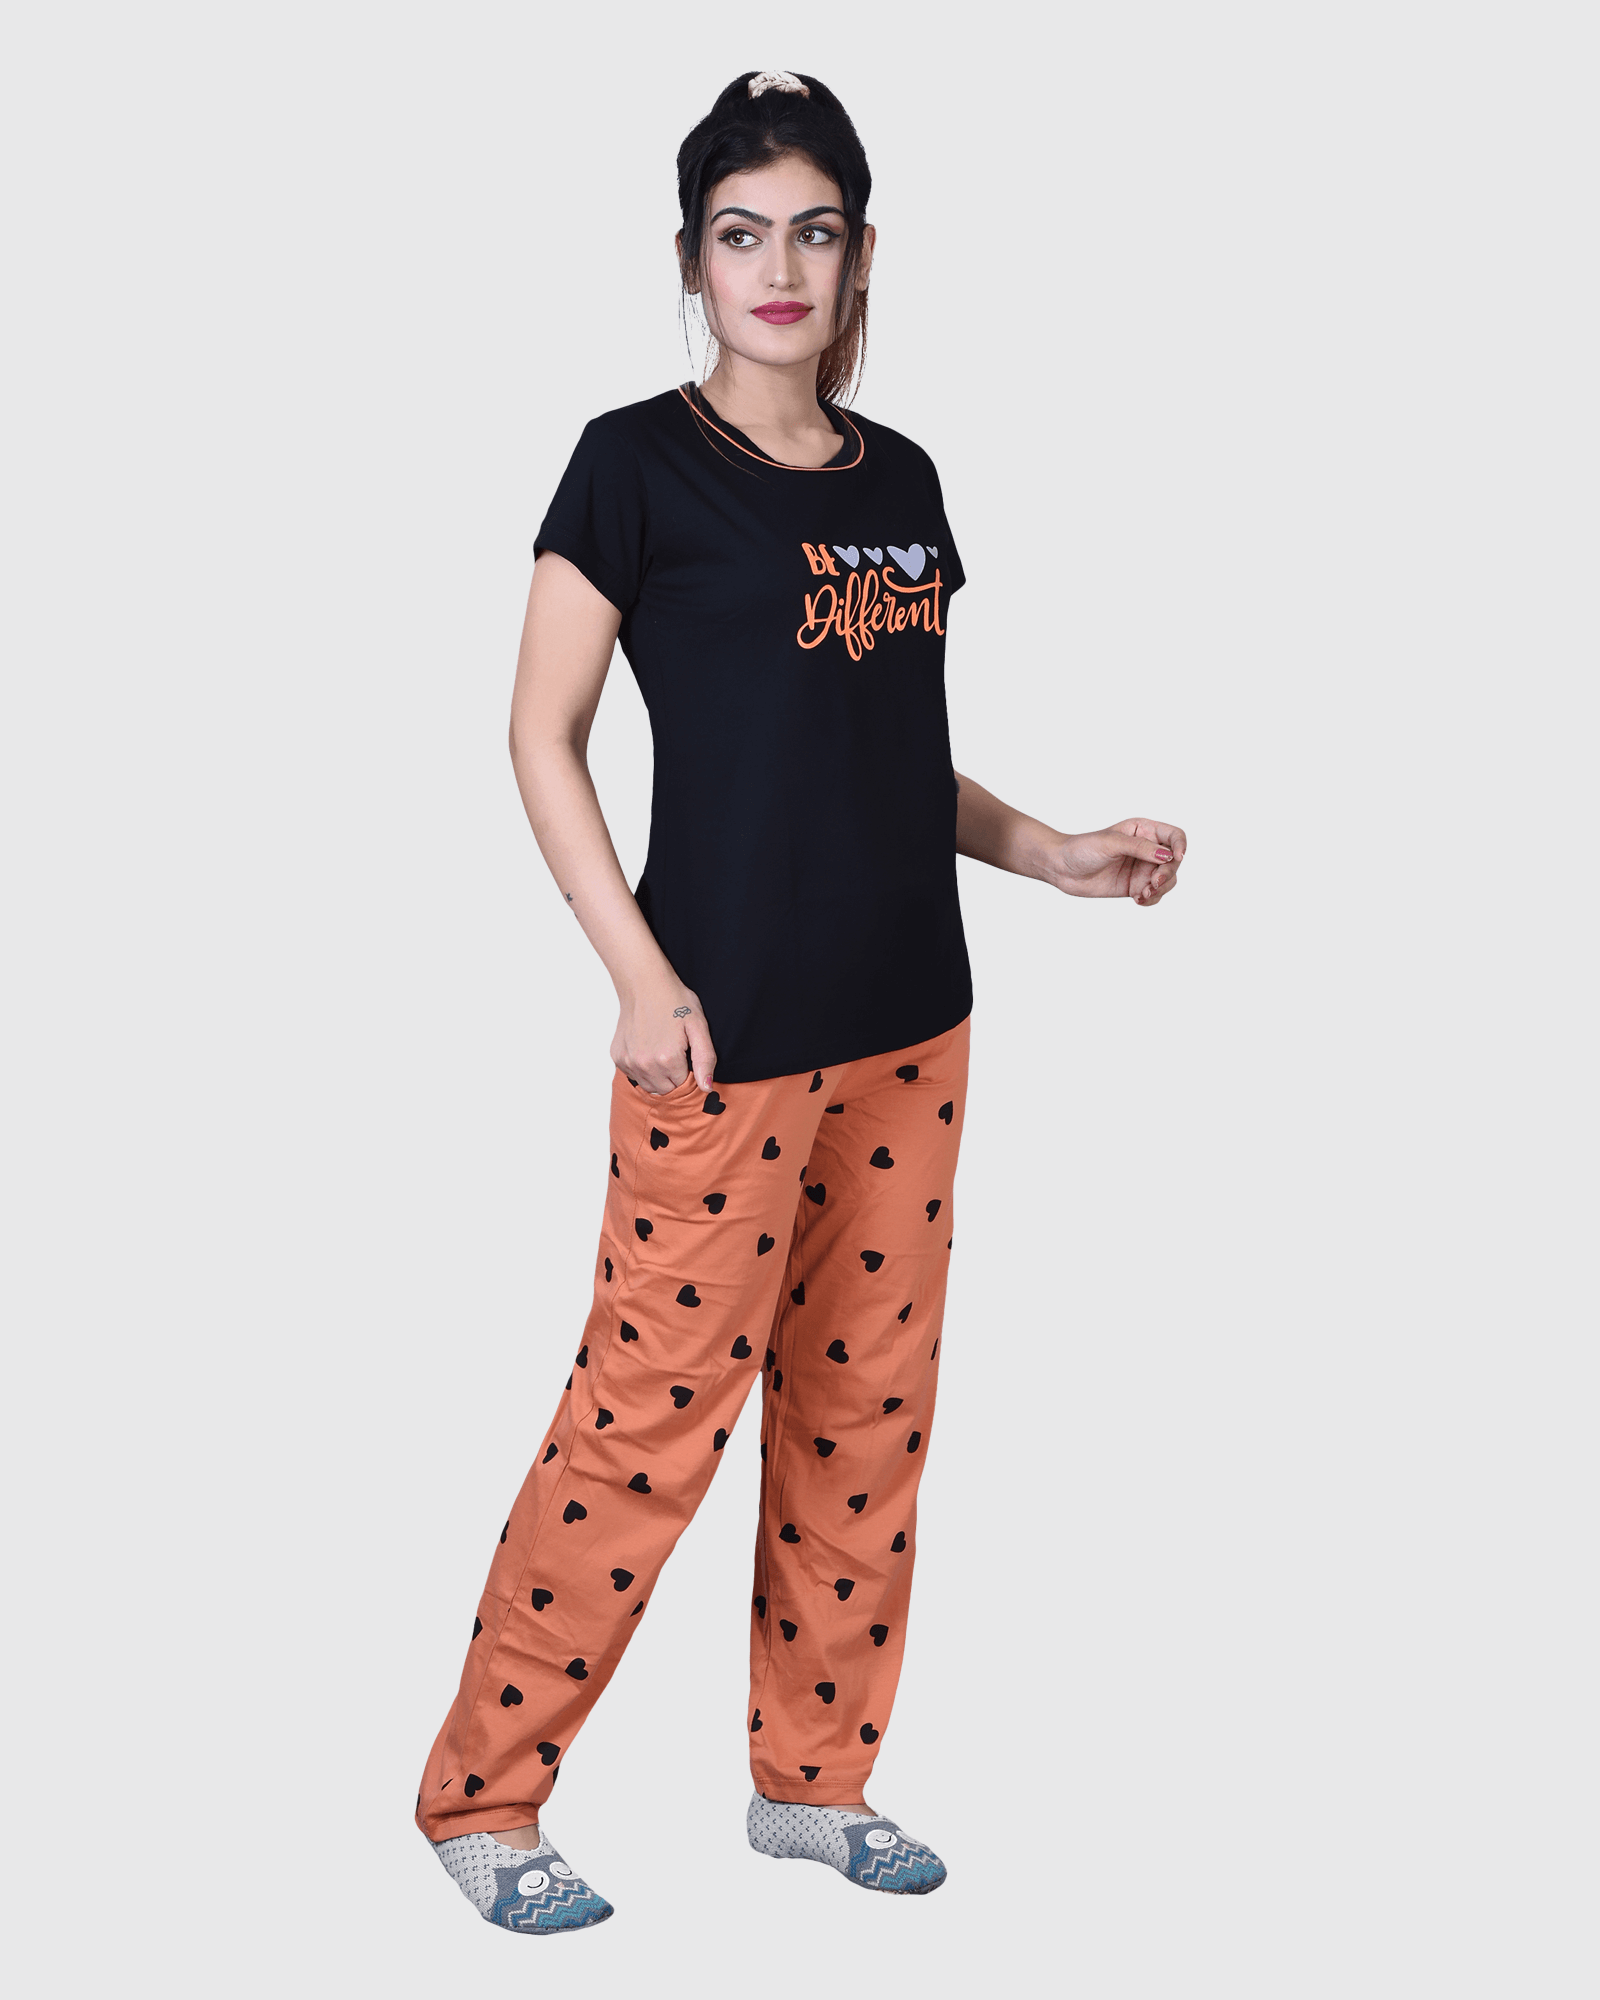 Fastyle Unisex Ladies Pajama Set at Rs 900/set in Mumbai